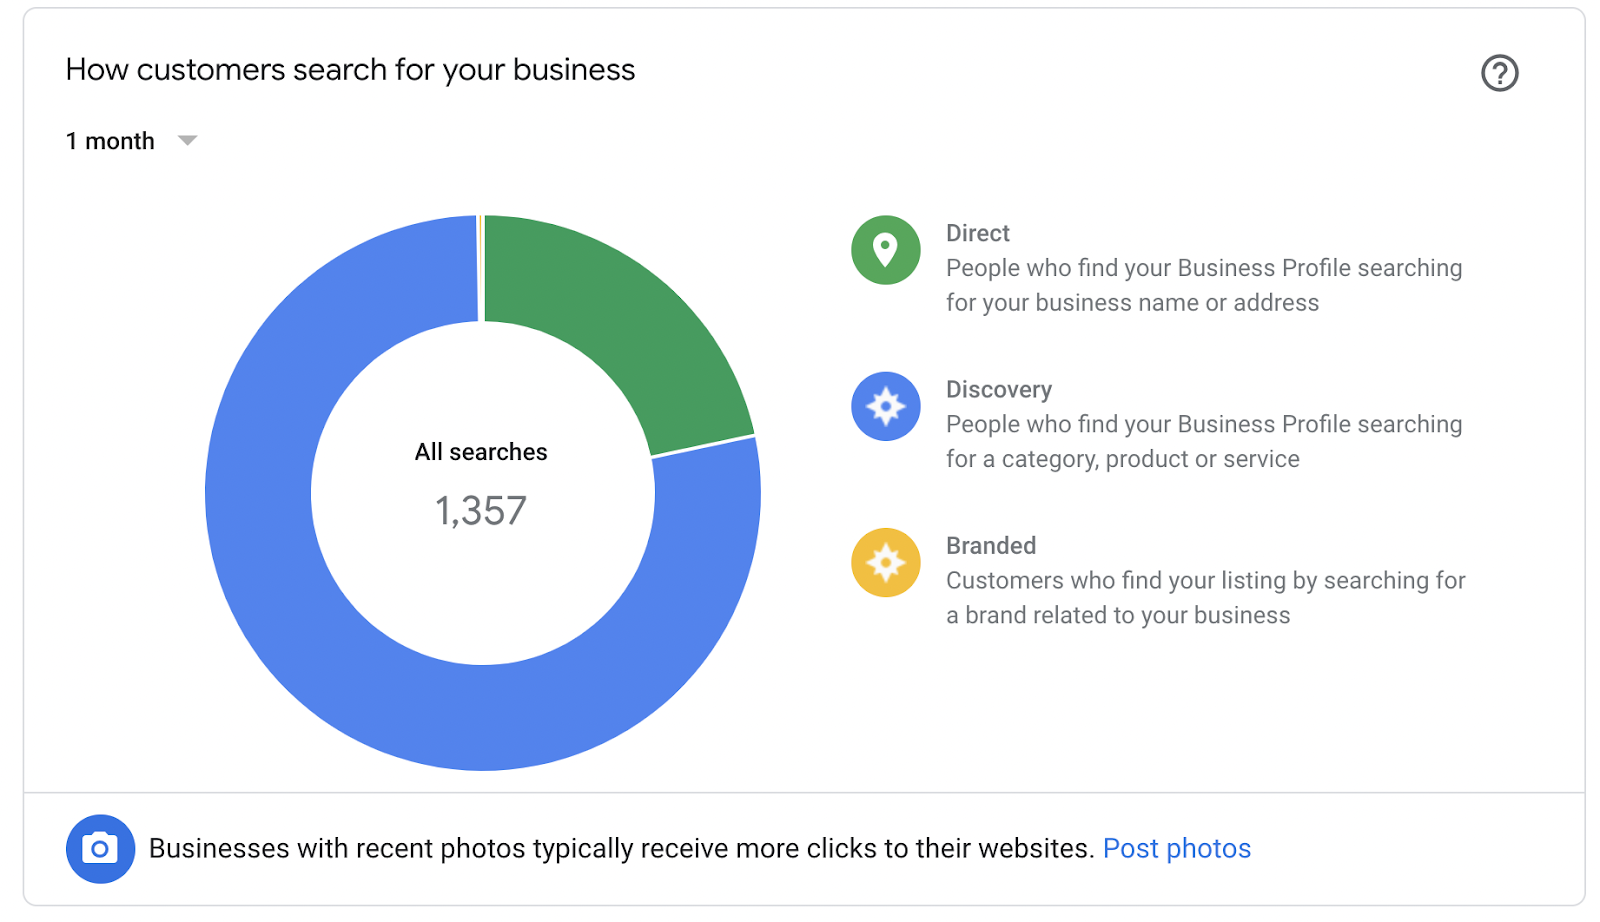 Google My Business Insights